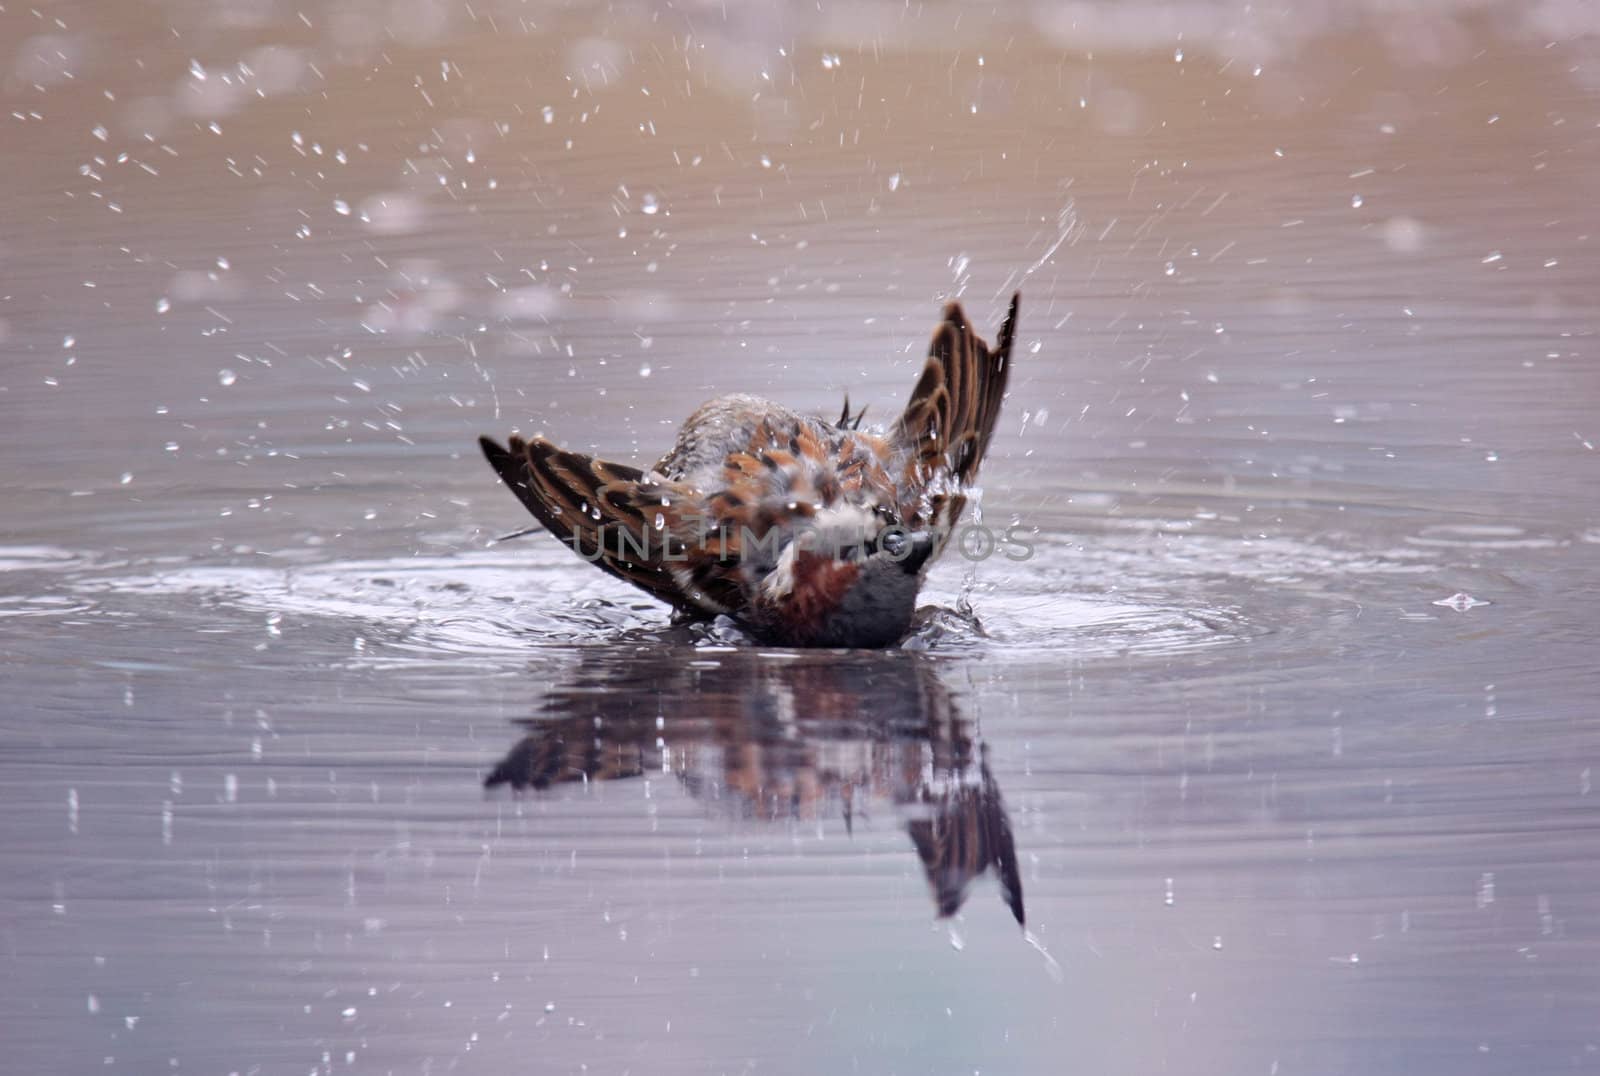 Bird Bath by Alvinge